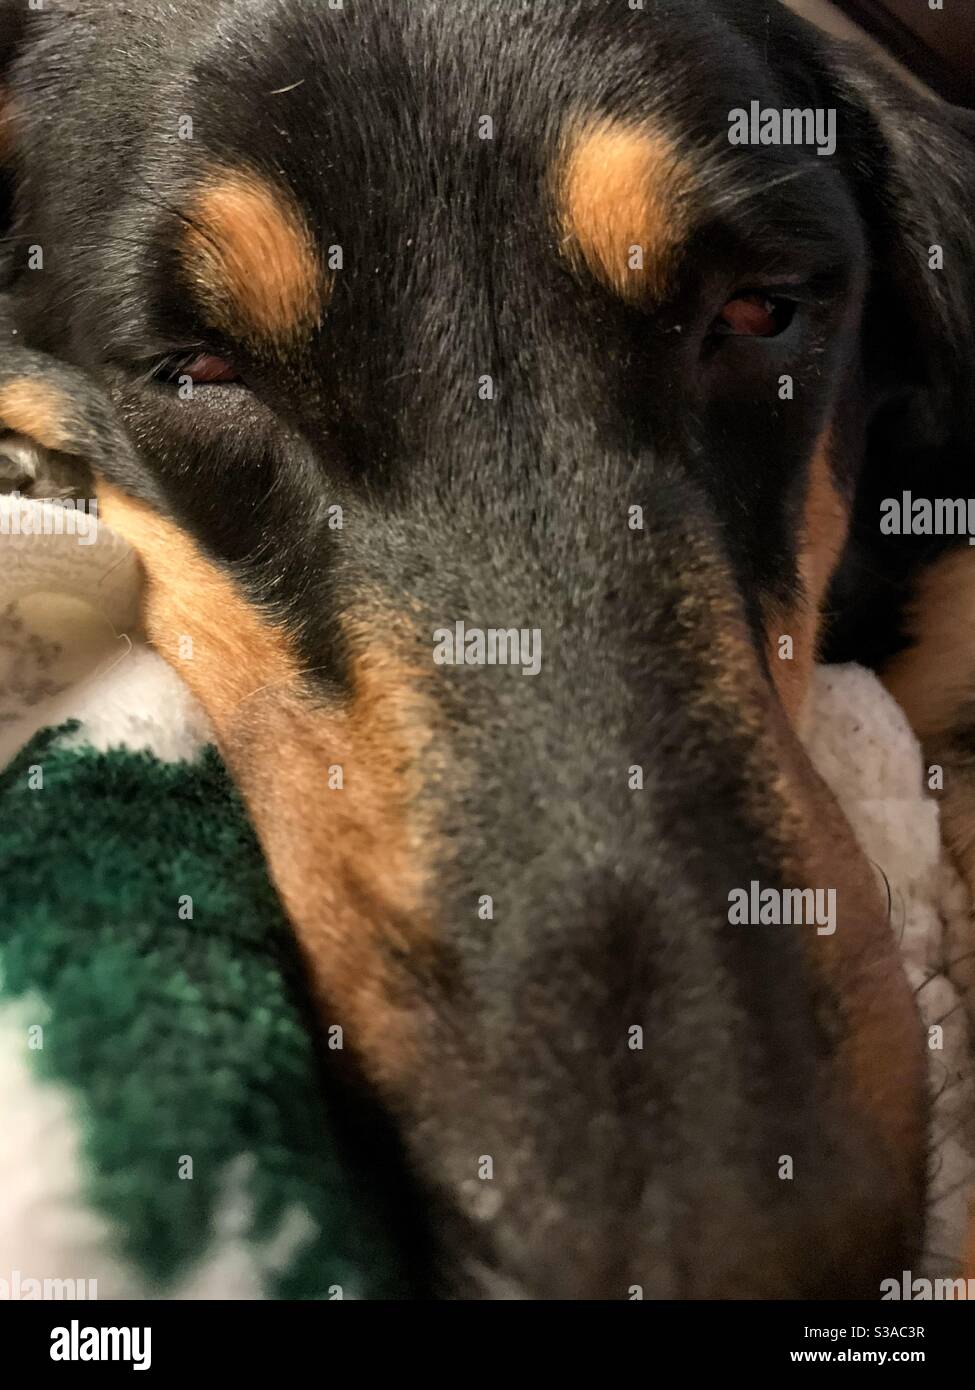 Sleeping Black and Tan hound dog. Stock Photo